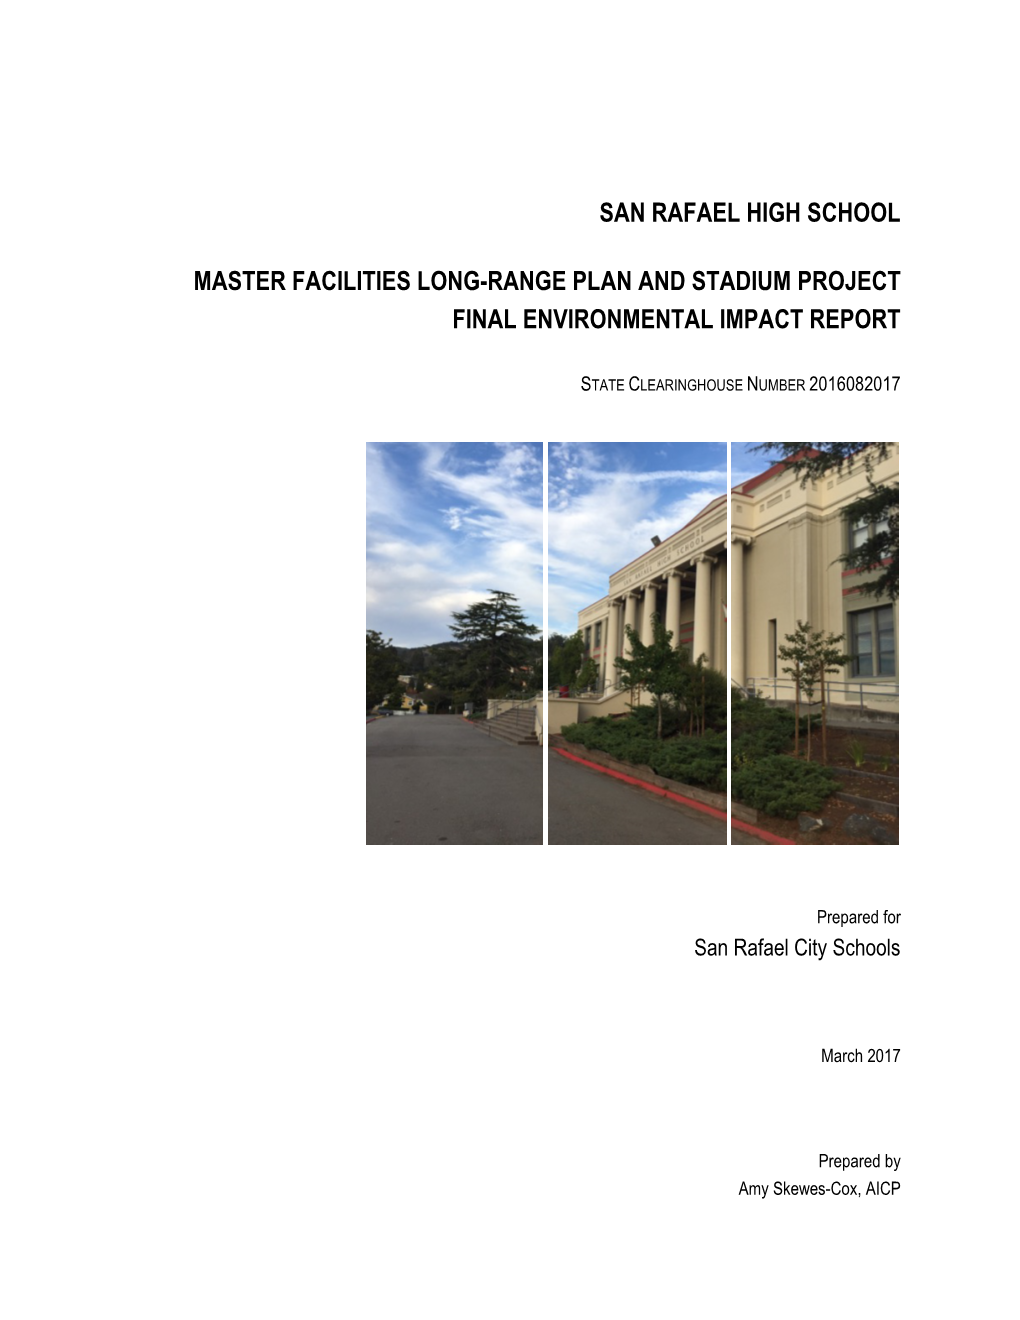 San Rafael High School Master Facilities Long-Range Plan and Stadium Project Final Environmental Impact Report